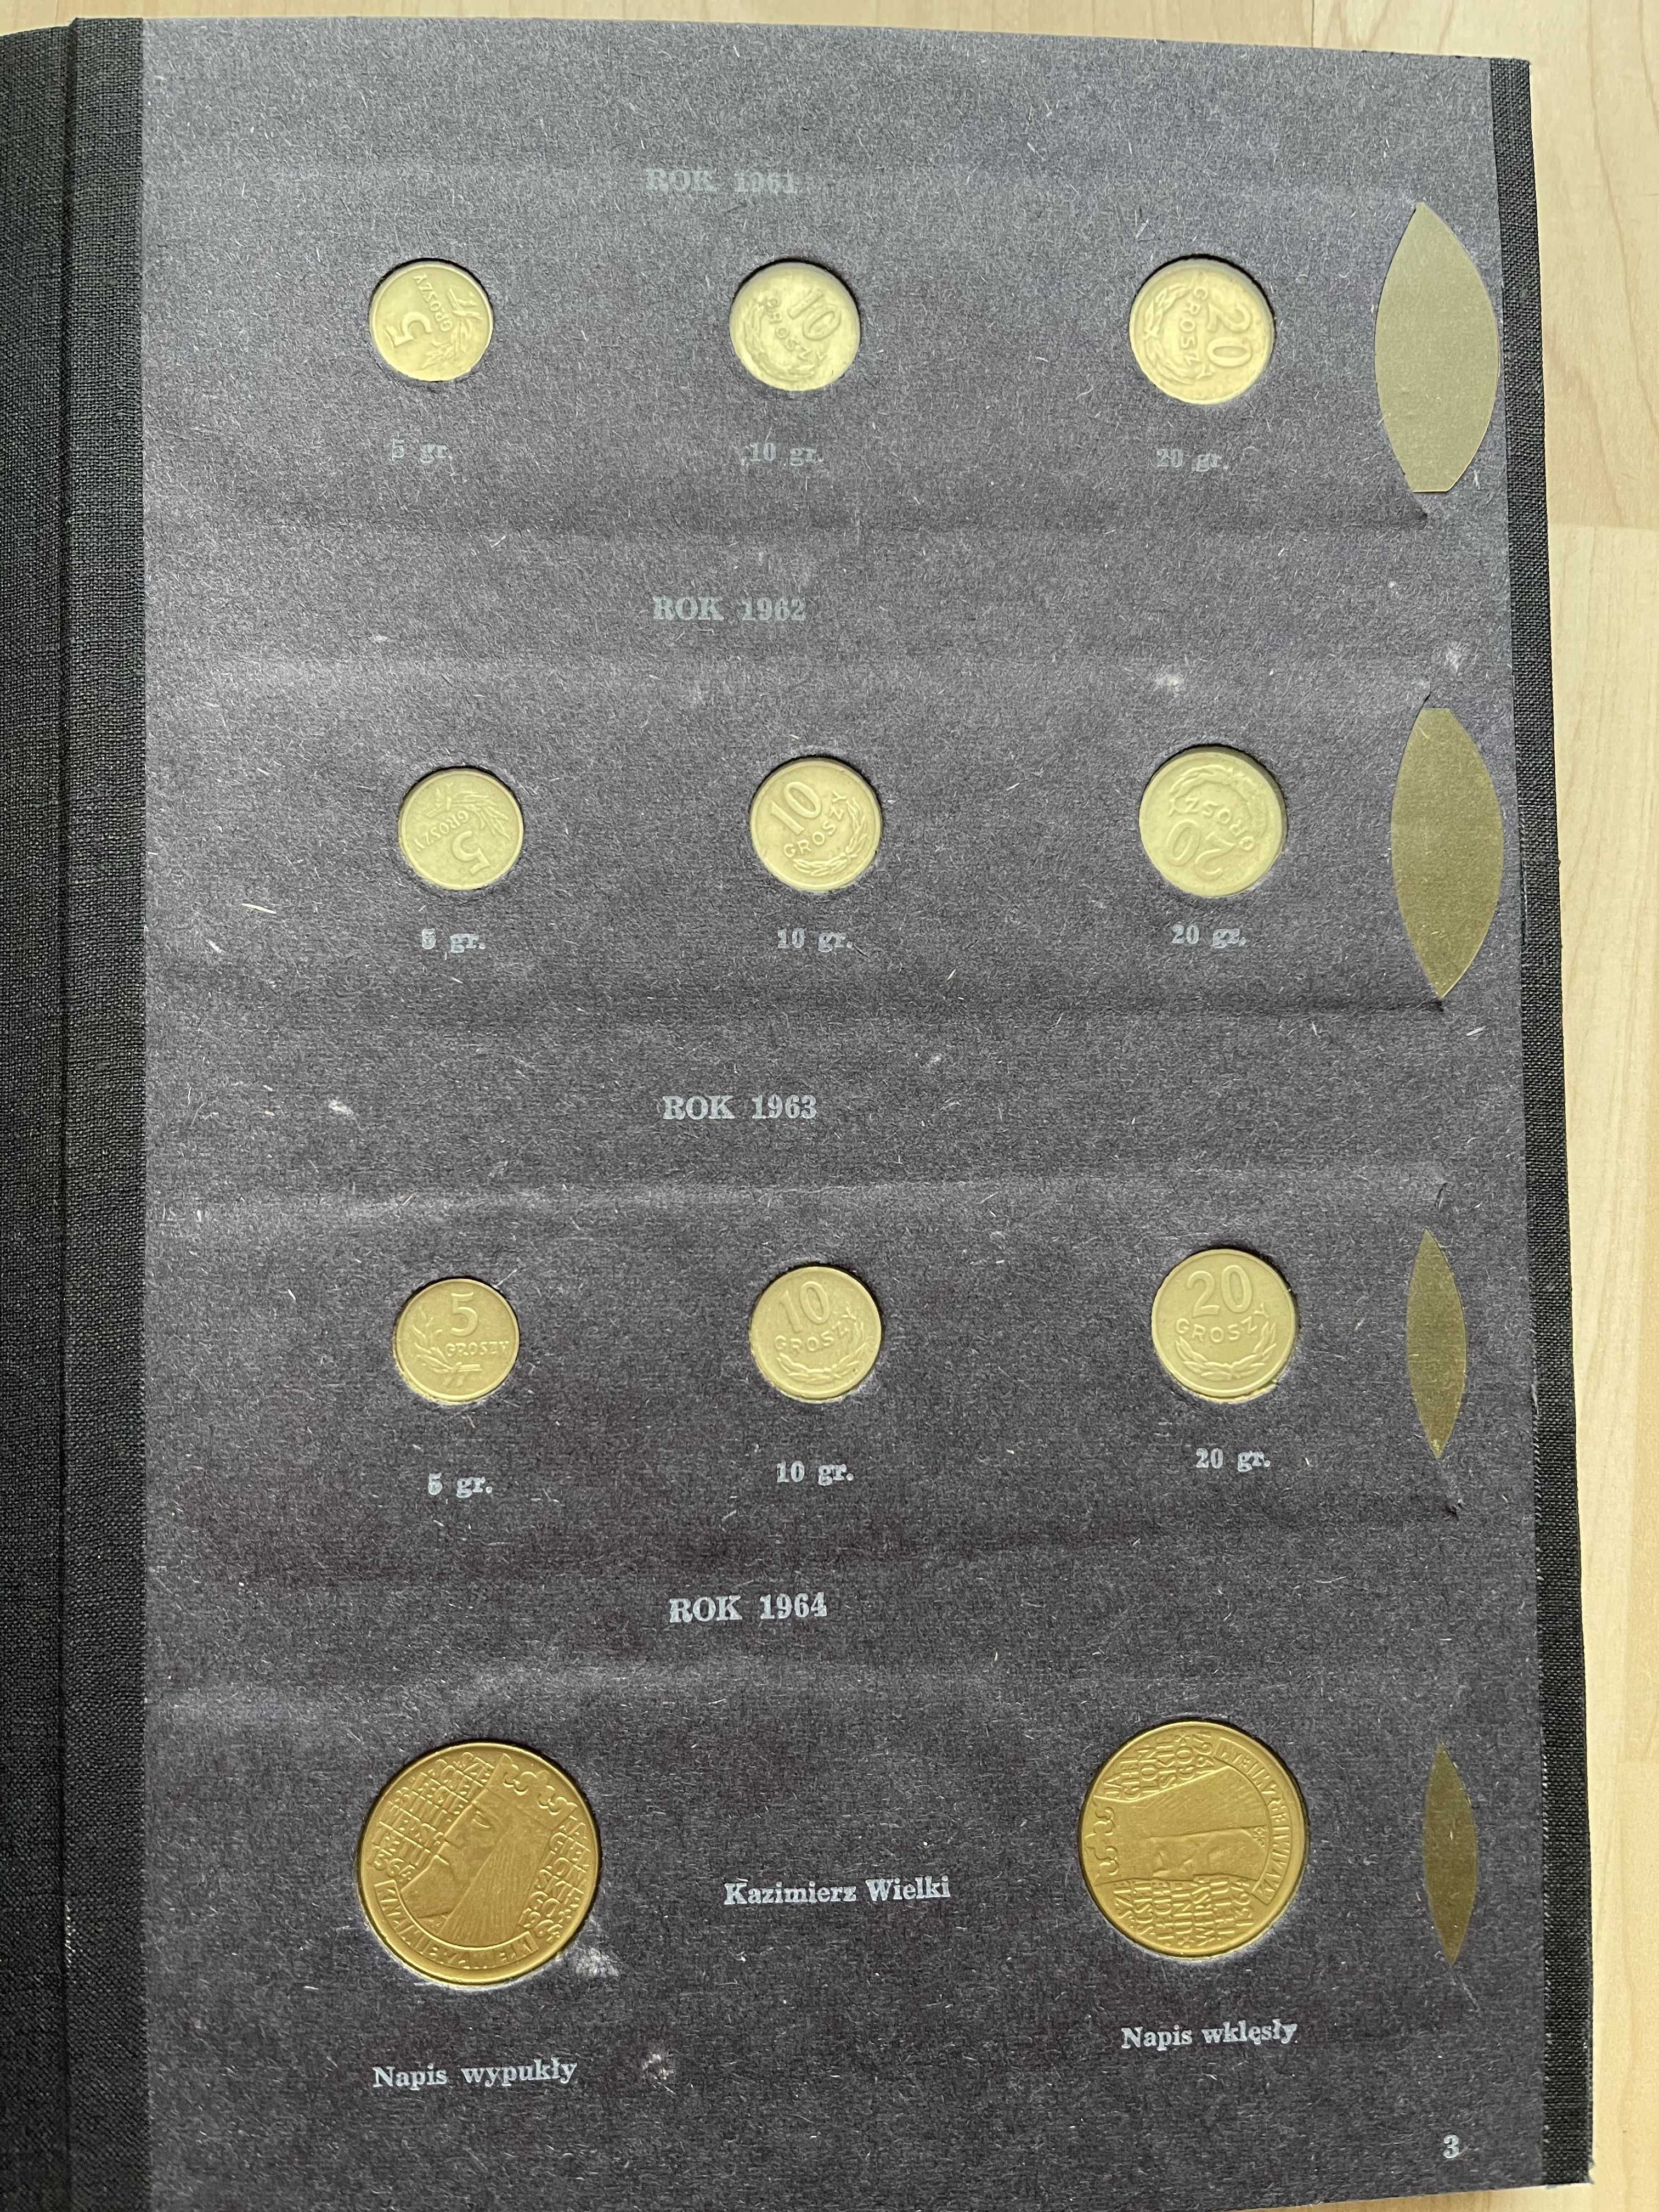 kompletny klaser FISCHER lata od 1949 do 1972 polskie monety